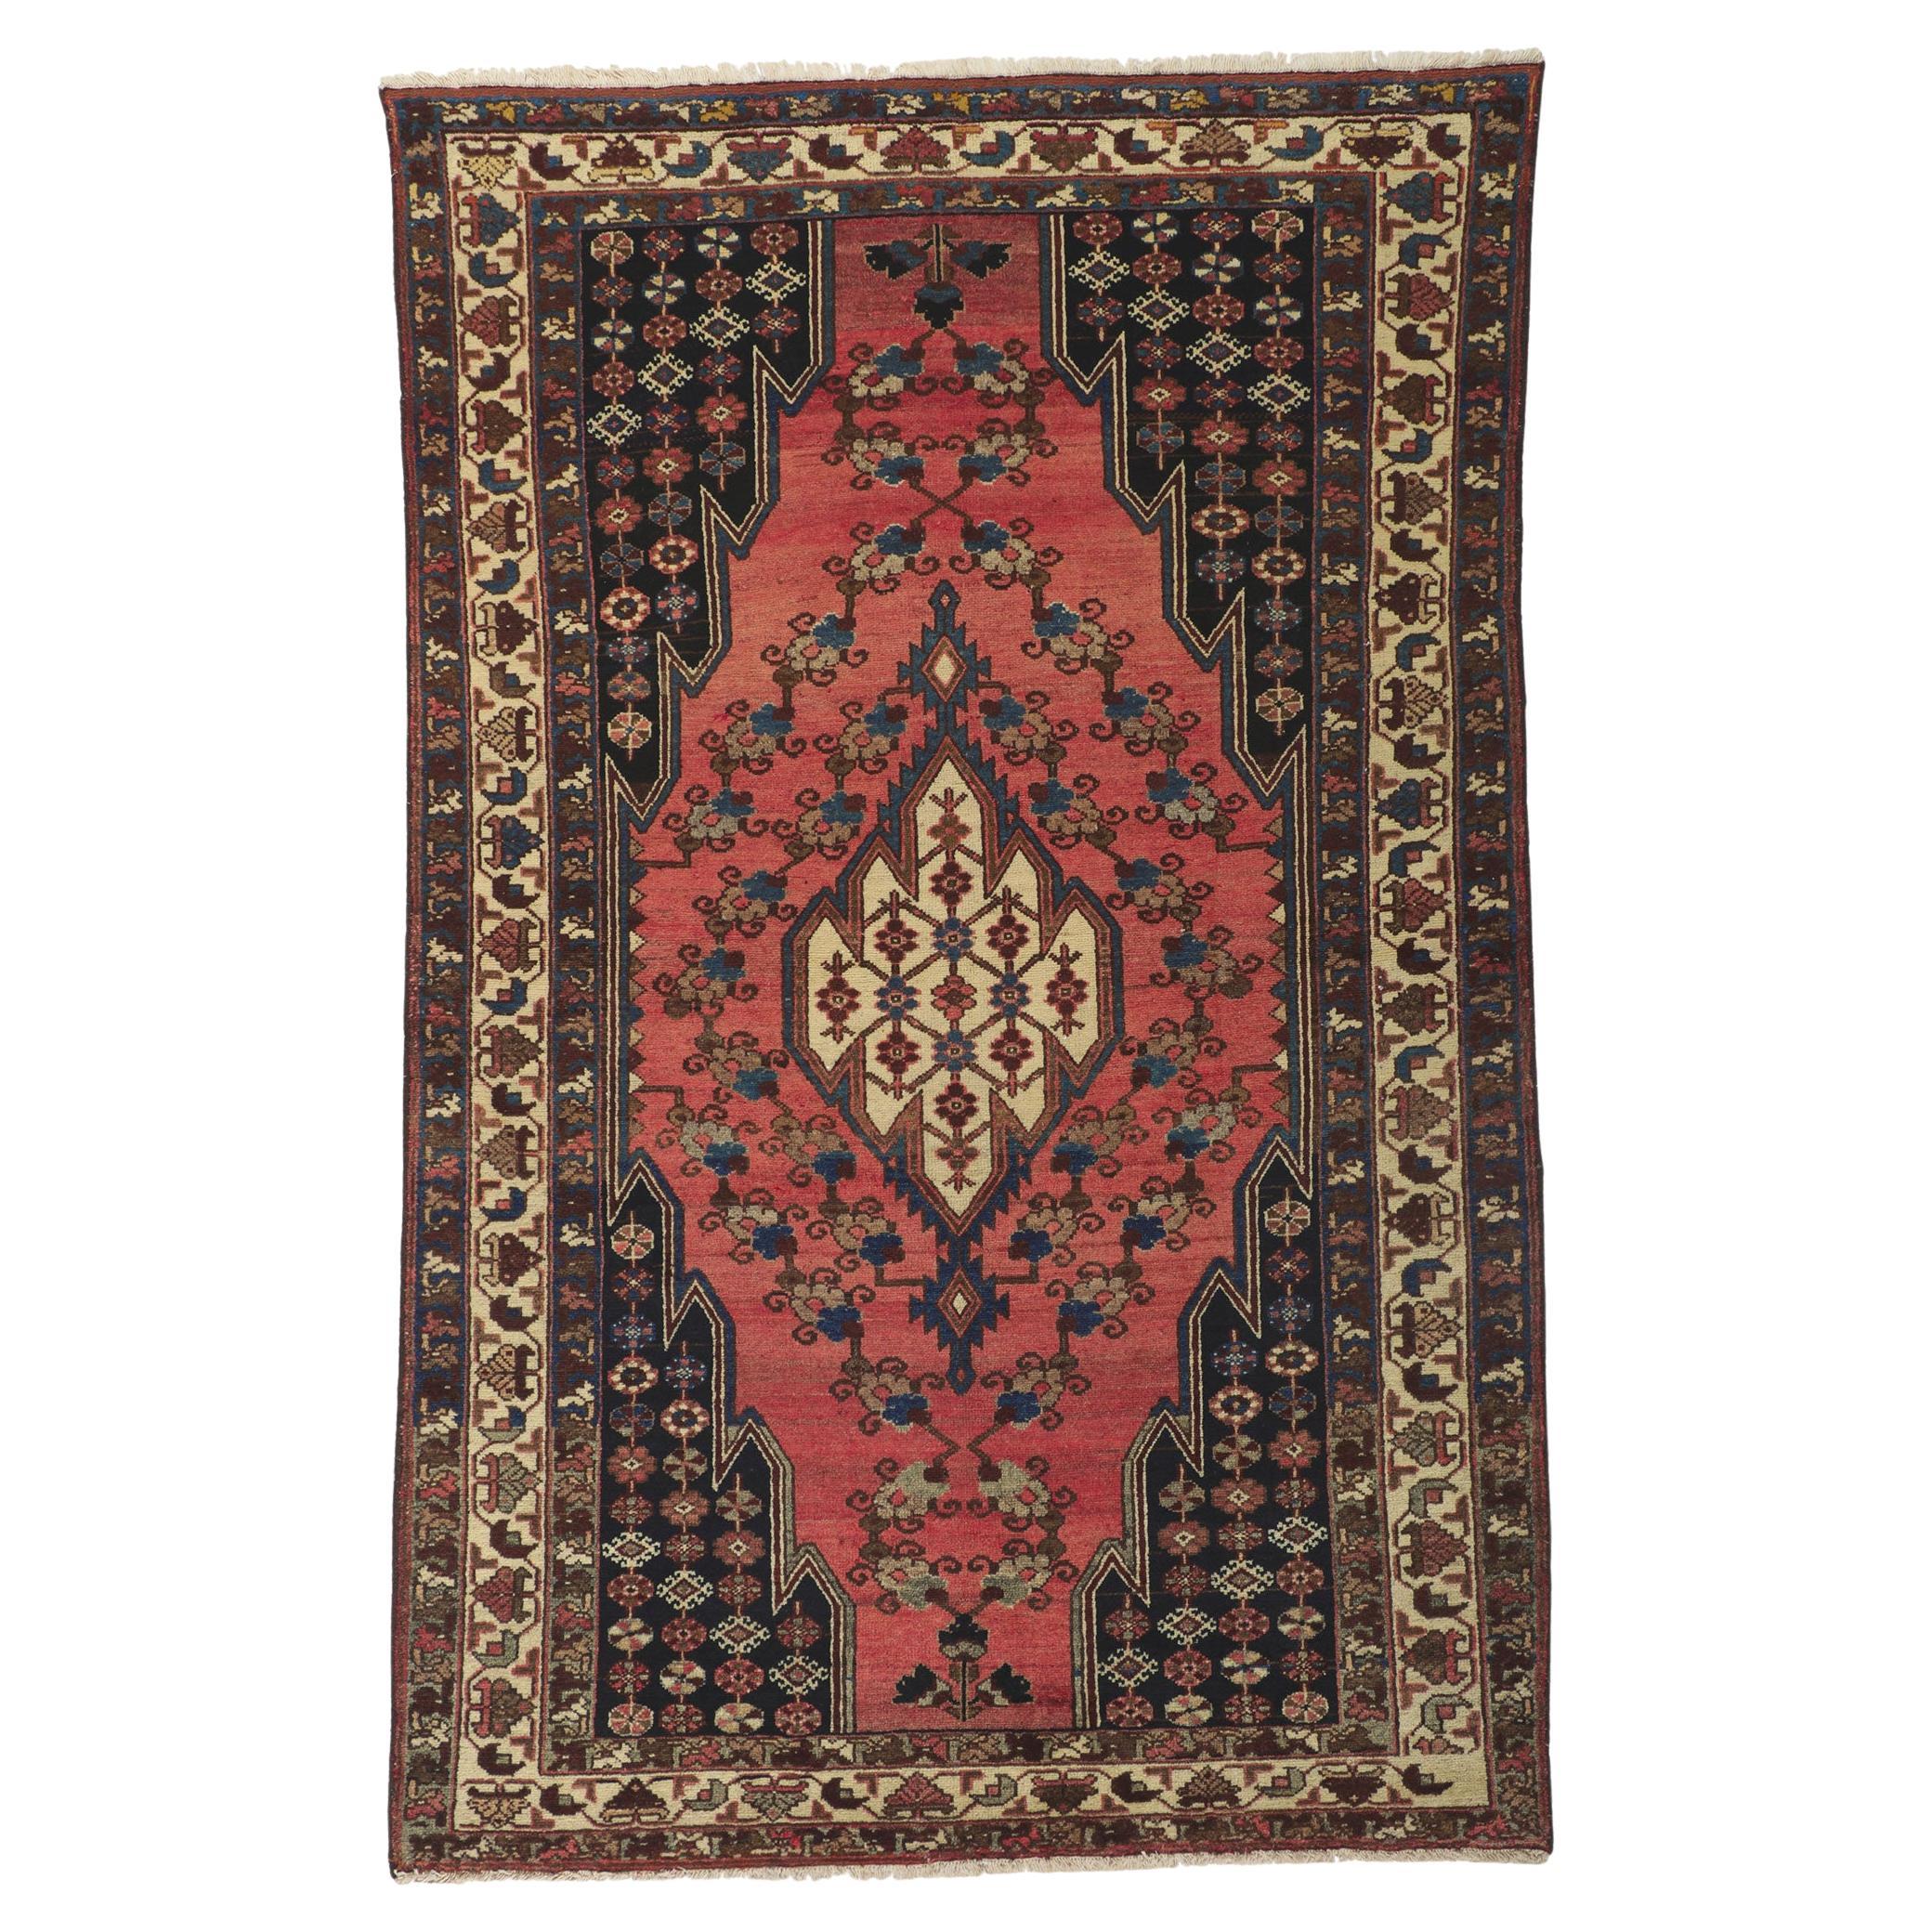 Antiker persischer Hamadan-Teppich, Midcentury Modern Meets Stammeskunst-Enchantment, antik